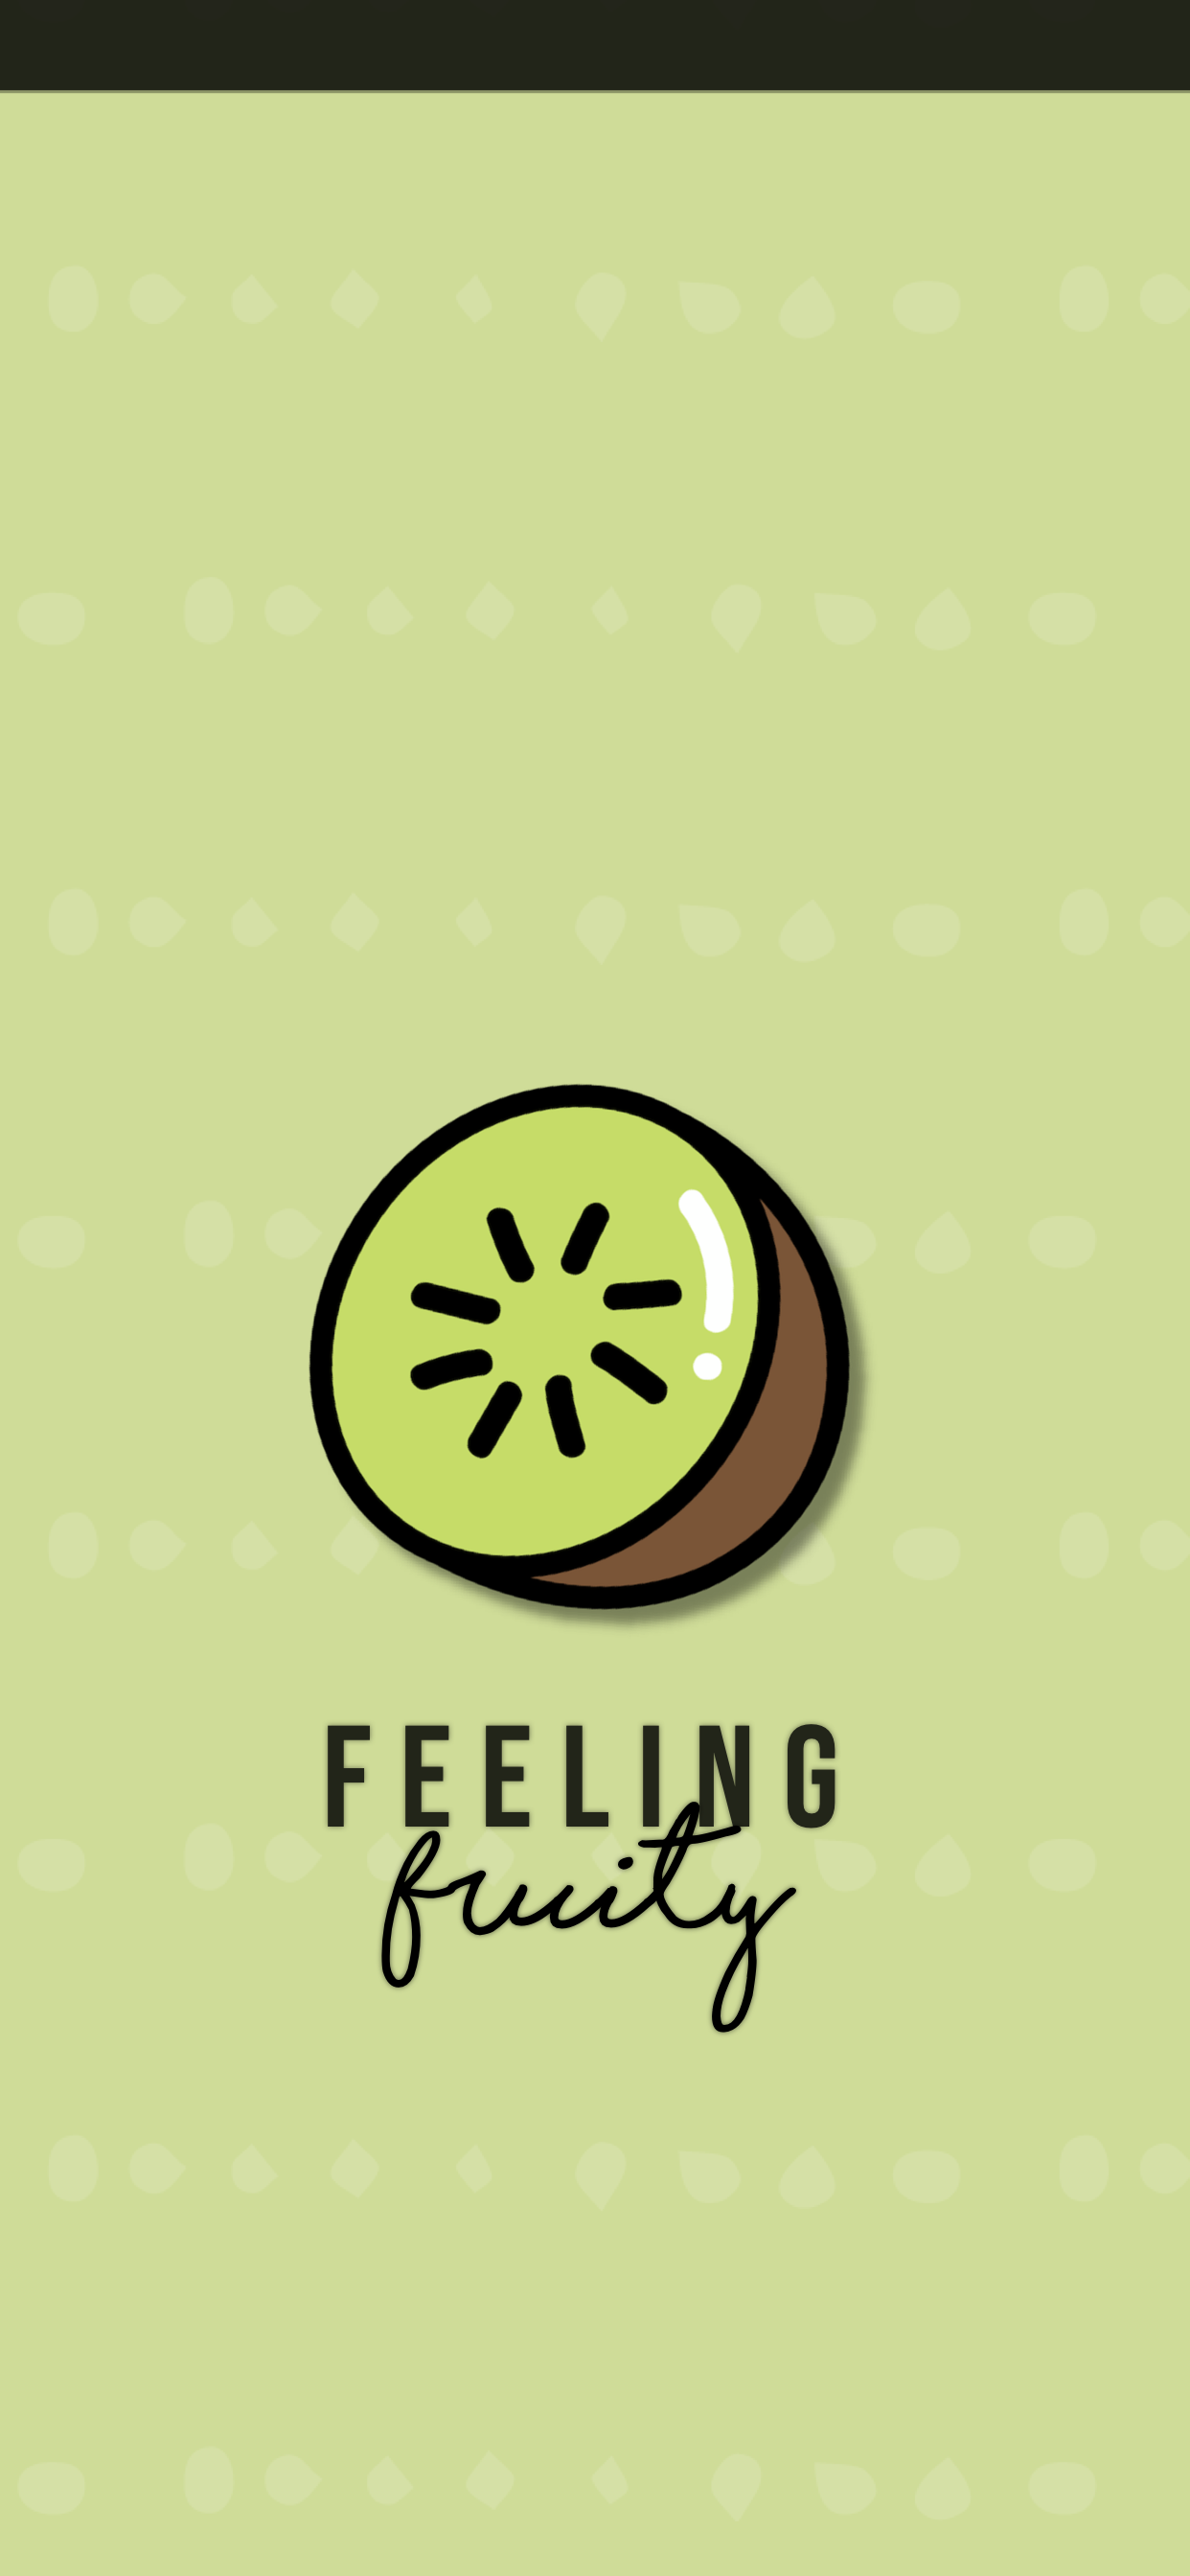 Feeling Fruity Kiwi Wallpaper. iPhone wallpaper green, Aesthetic iphone wallpaper, Unicorn emoji wallpaper